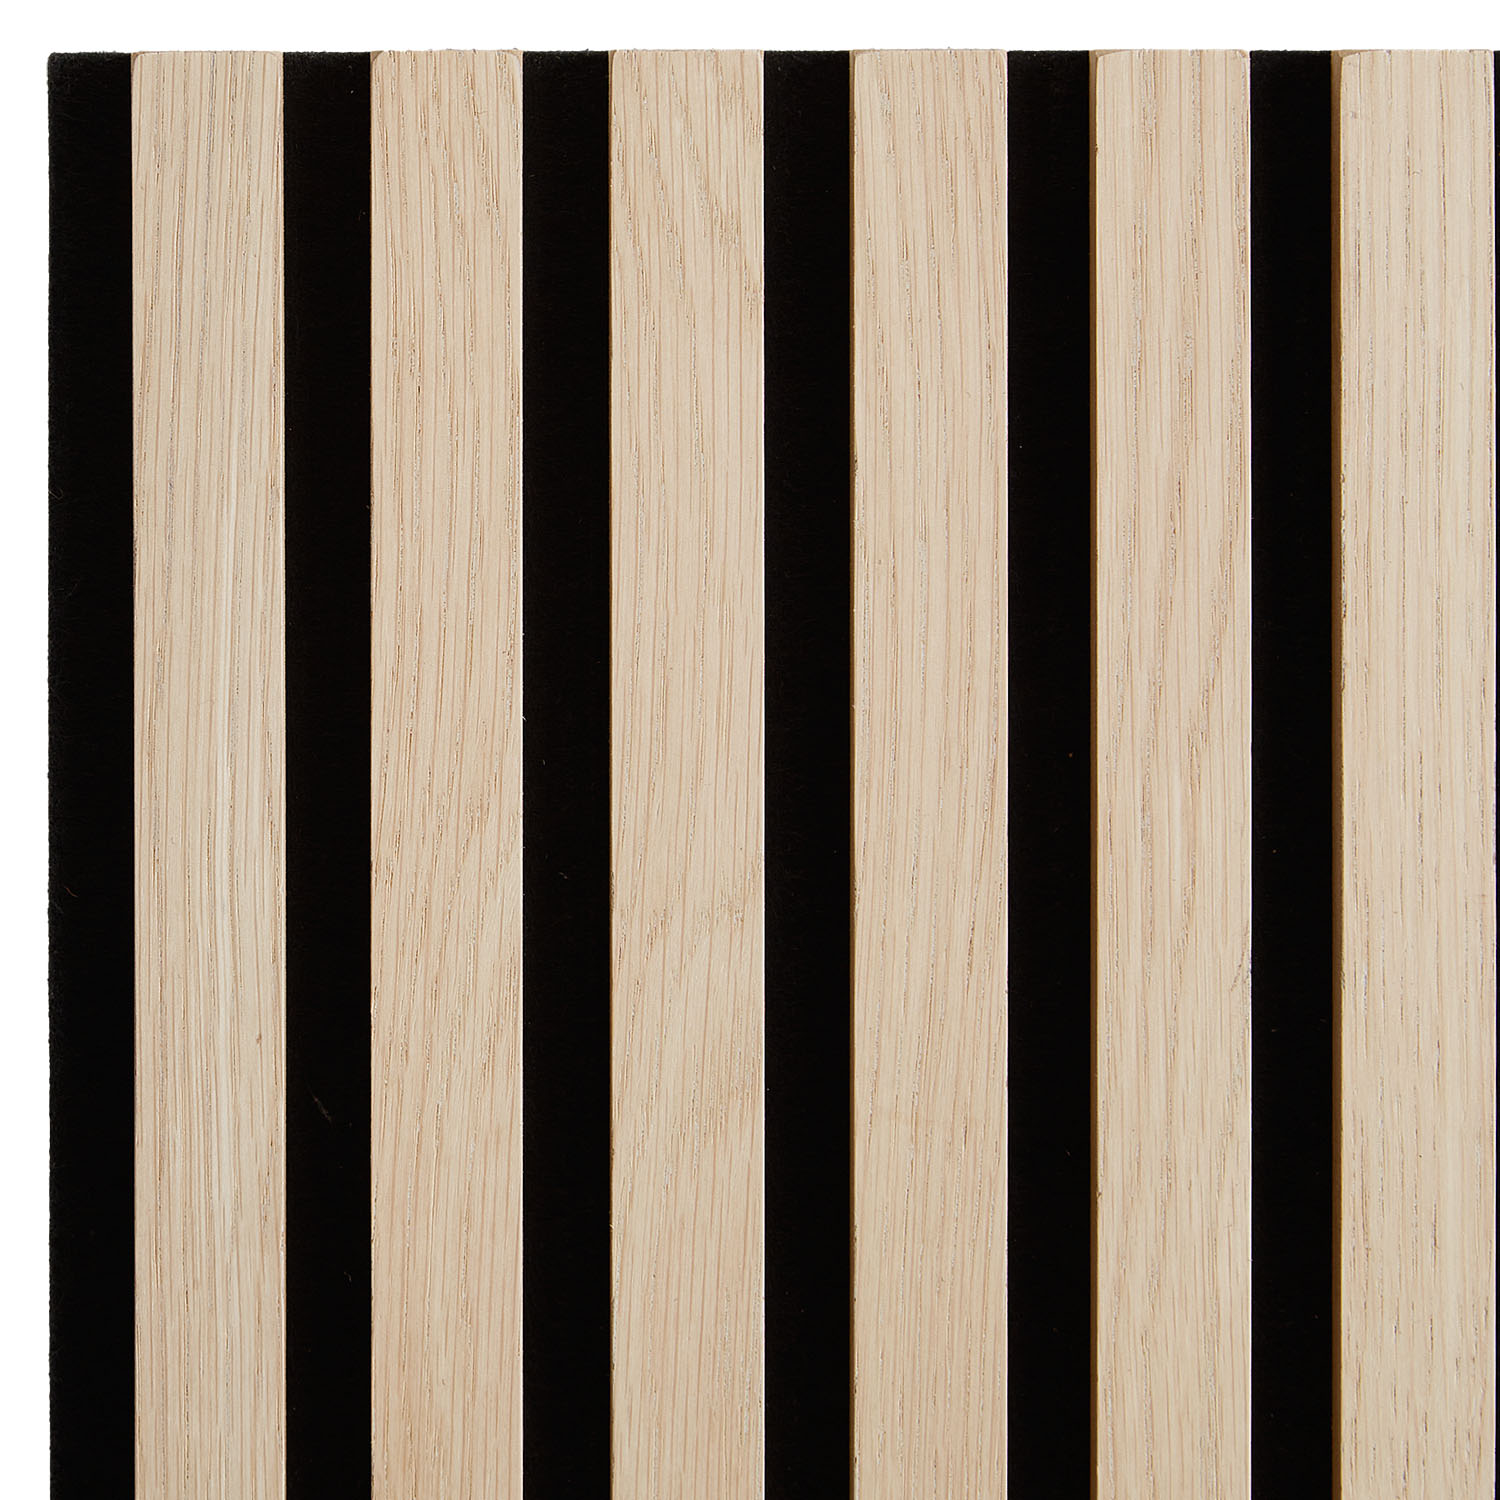 Akustikpaneele Holz Natur 60 x 120 cm 1, 2 oder 4 Paneele Wandpaneele Deckenpaneele 3D Wandpaneel Wandverkleidung Dekorpaneel